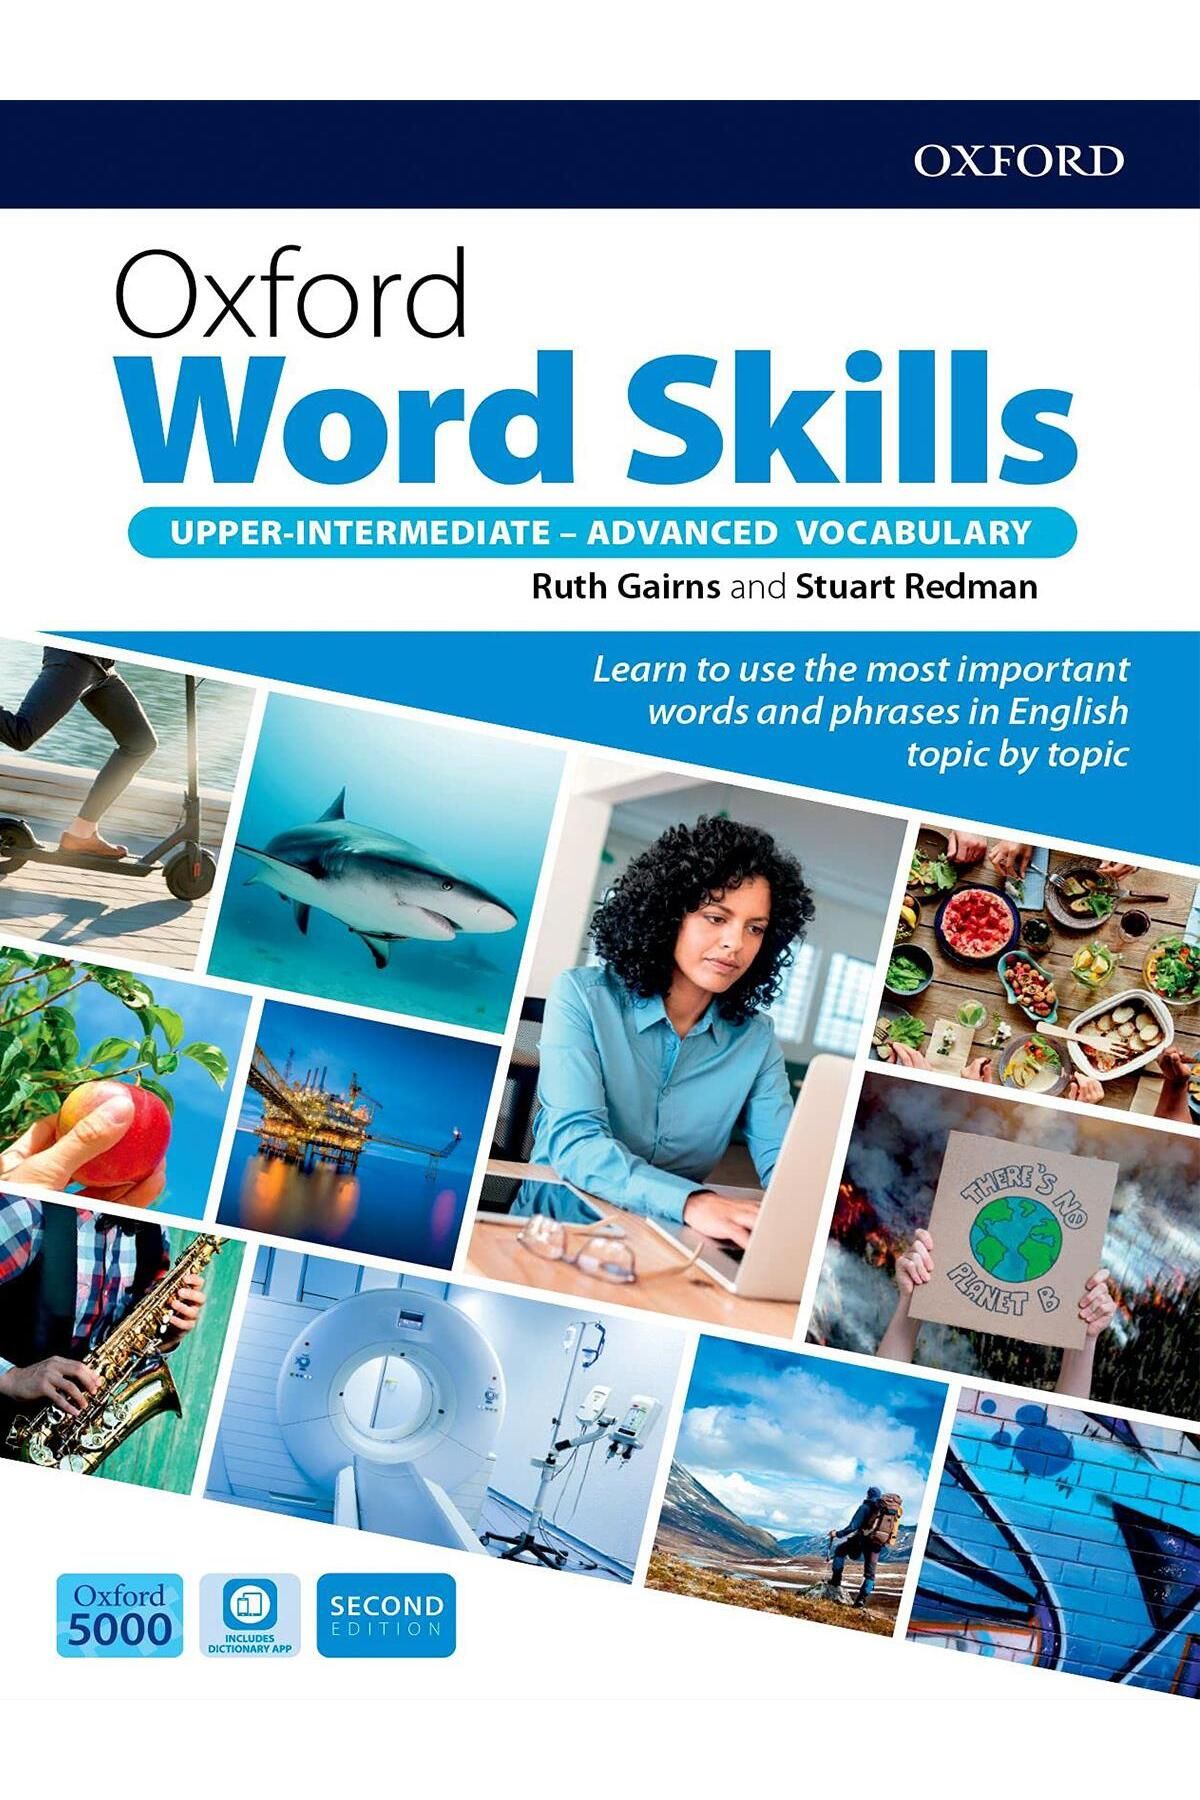 OXFORD UNIVERSITY PRESS Oxford Word Skills Upper-Intermediate and Advanced Vocabulary